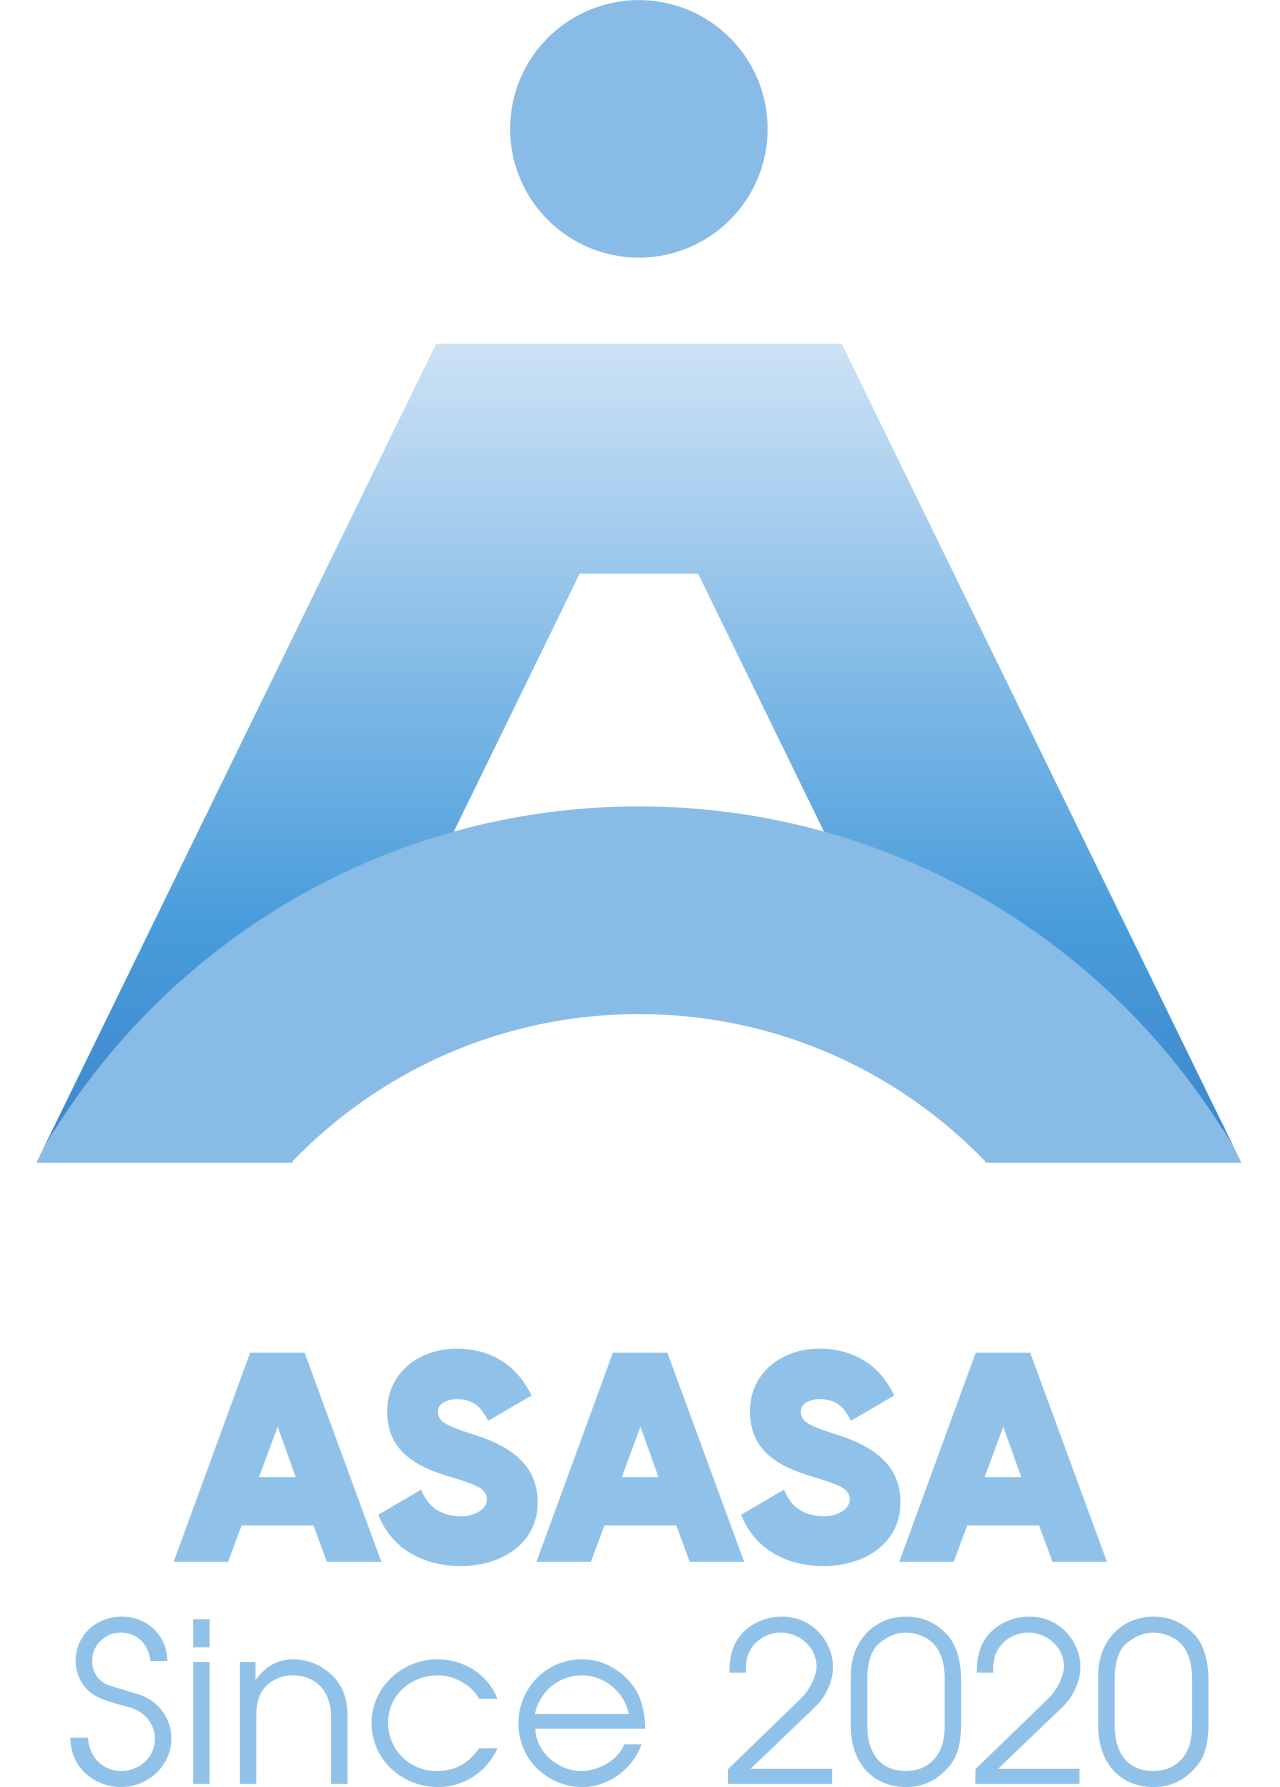 asasa's web page